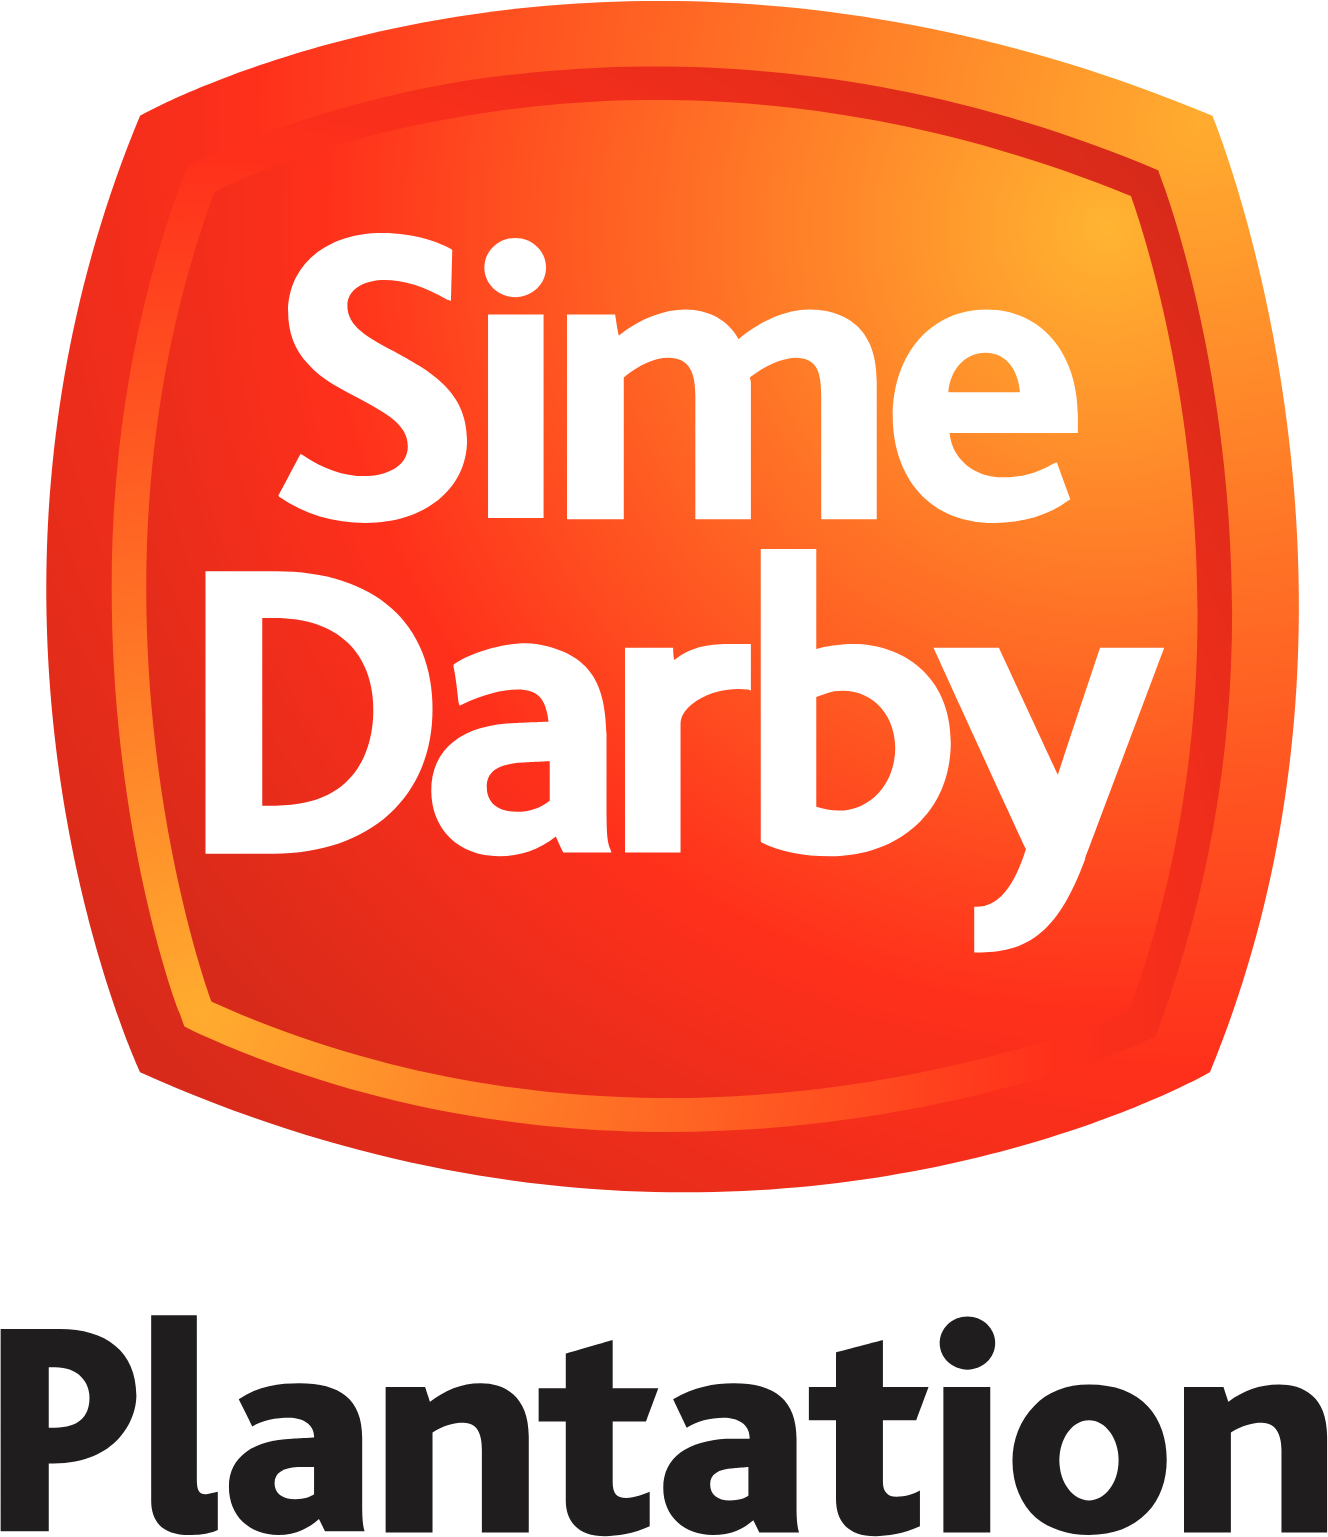 Sime Darby Plantation logo large (transparent PNG)